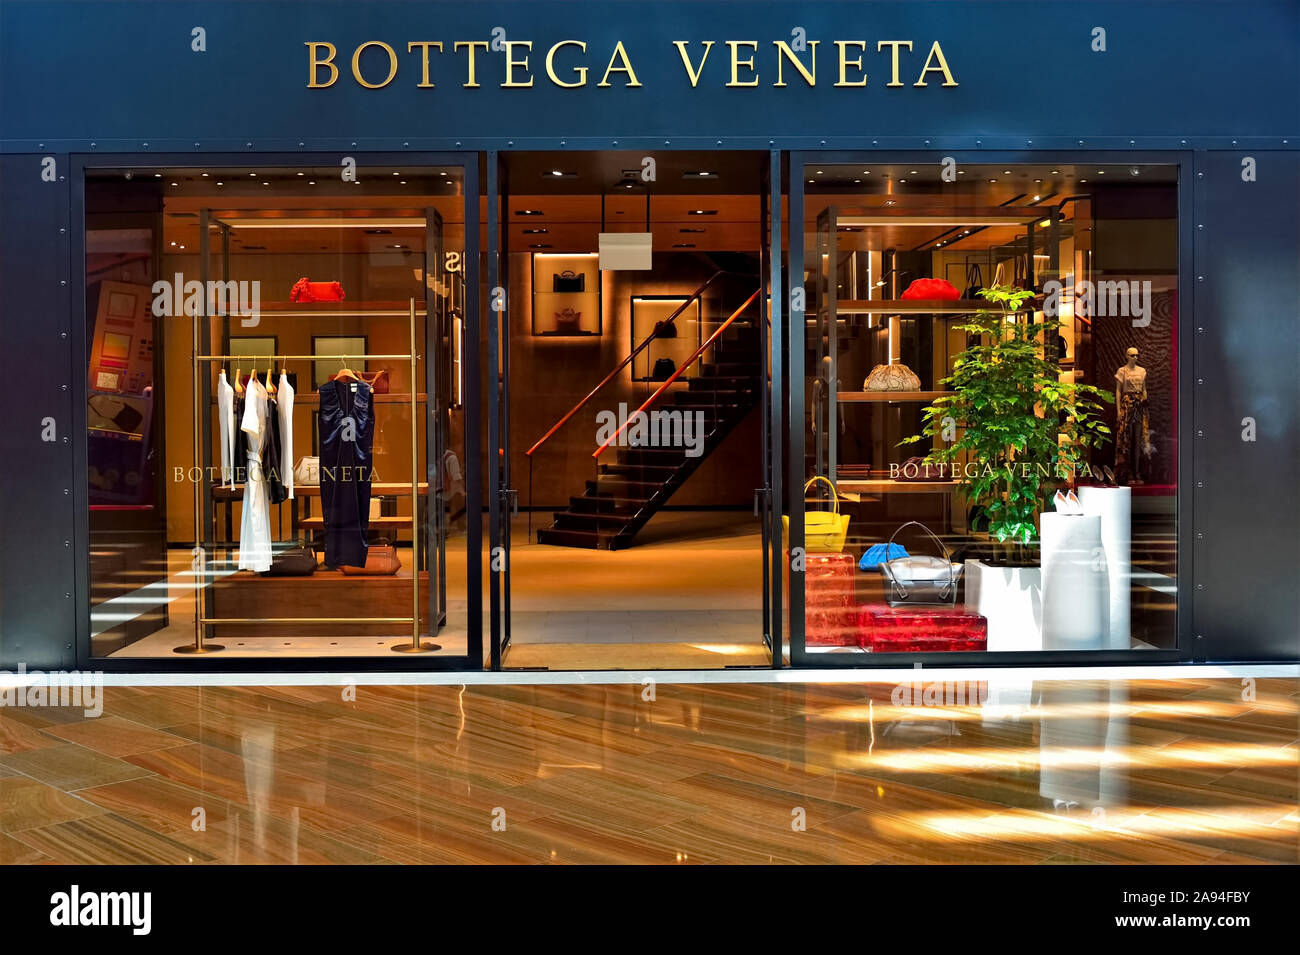 Singapore - July 23 2019: Front view of exterior of Bottega Veneta, Italian fashion brand with signage at Marina Bay Sands shopping centre, Singapore Stock Photo